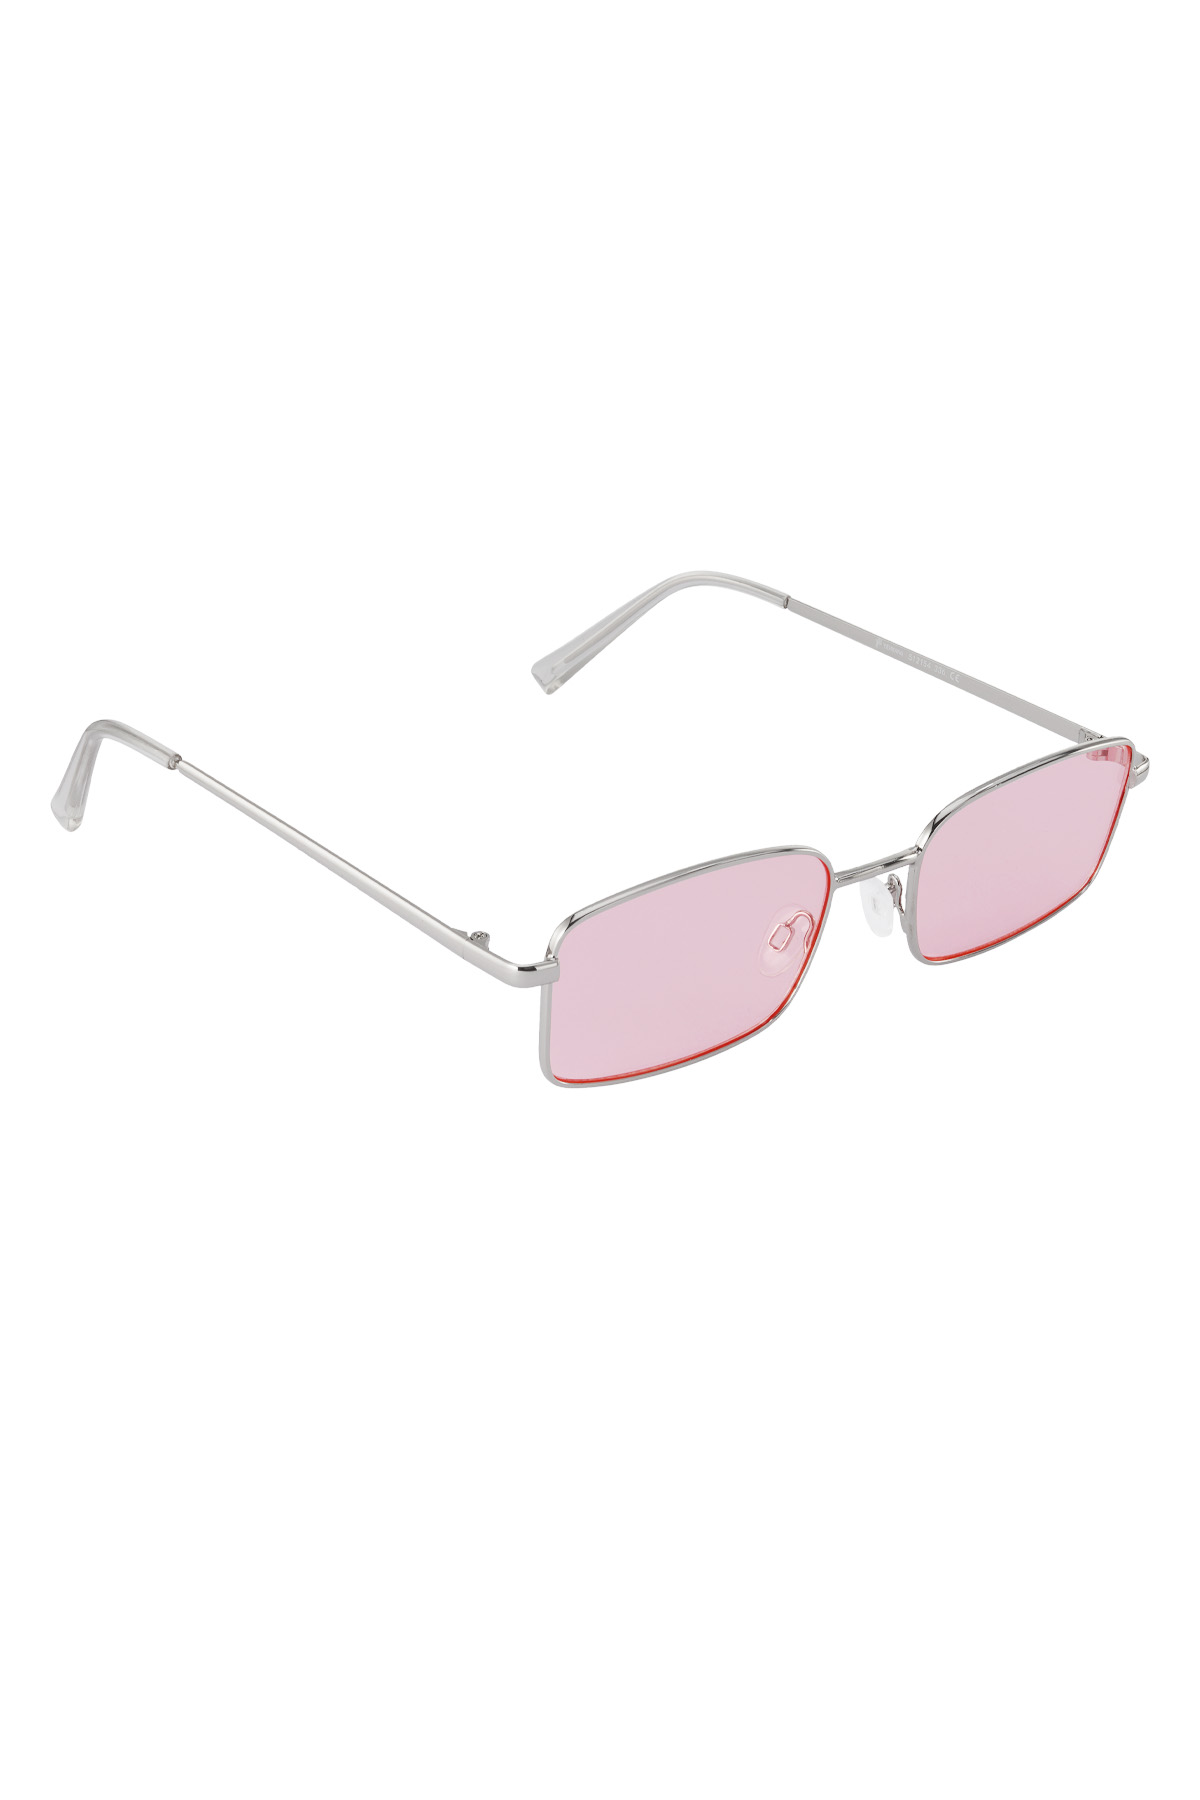 Sonnenbrille strahlender Durchblick - Roségold h5 